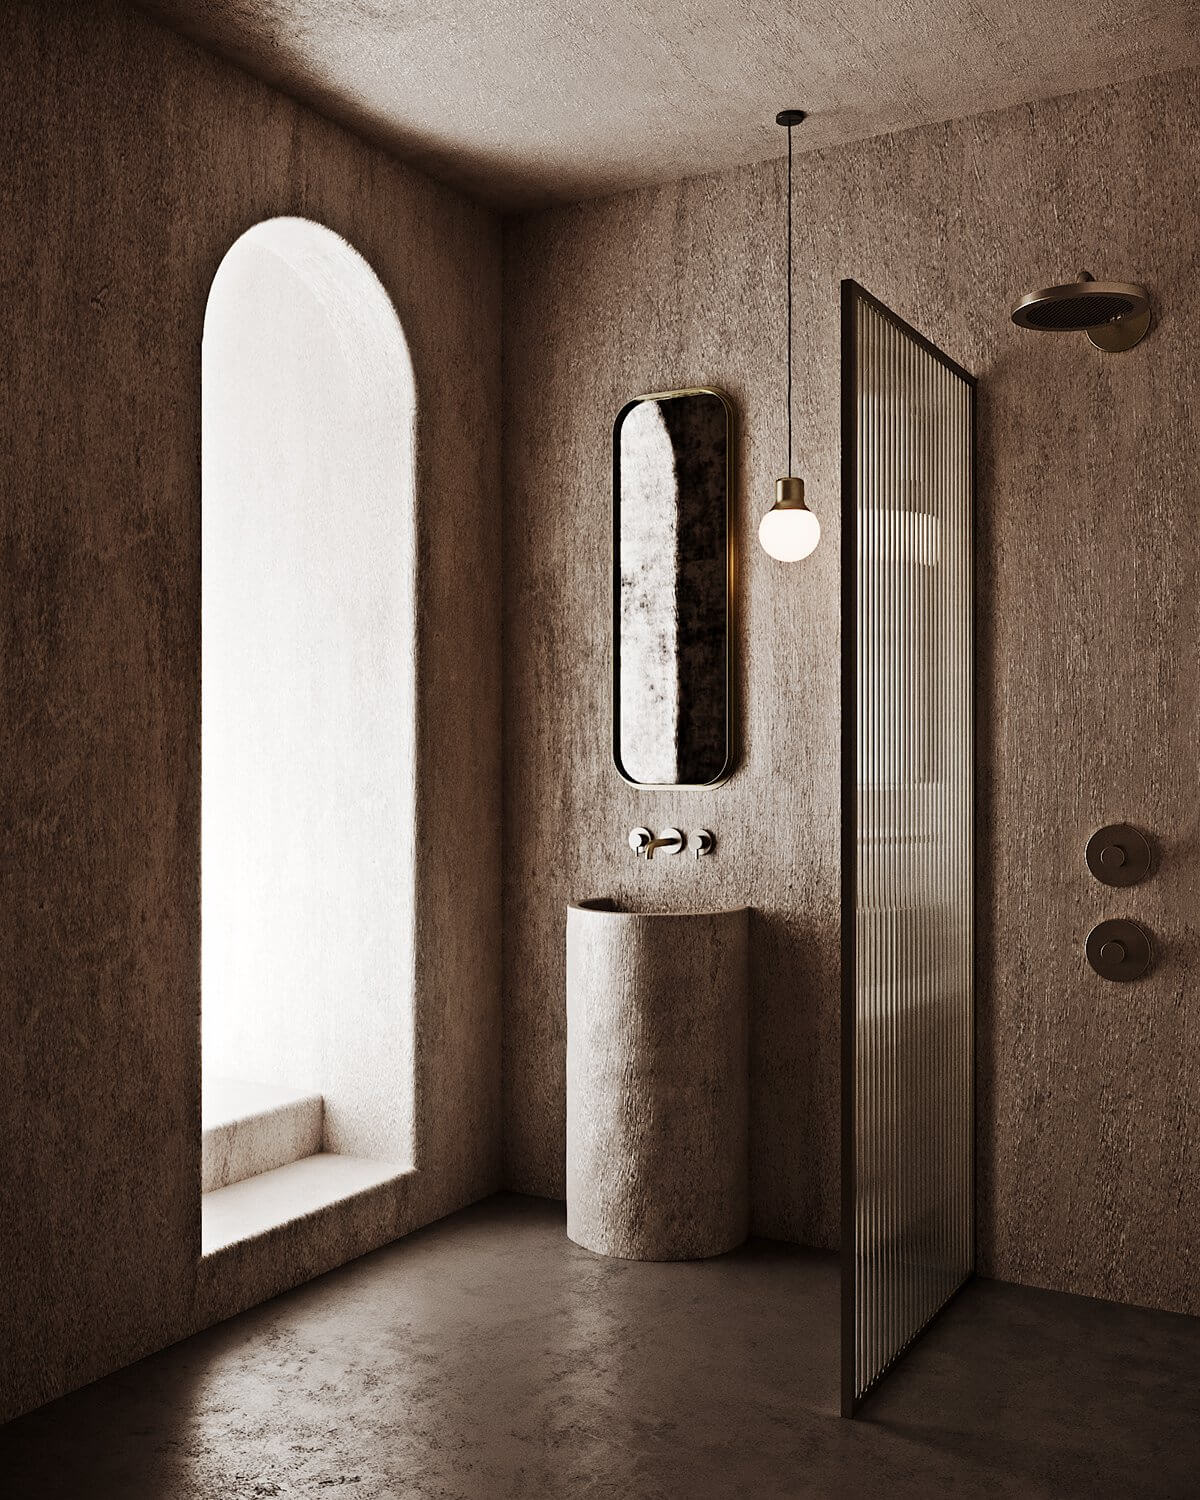 Monochrome bathroom design glass shower - cgi visualization